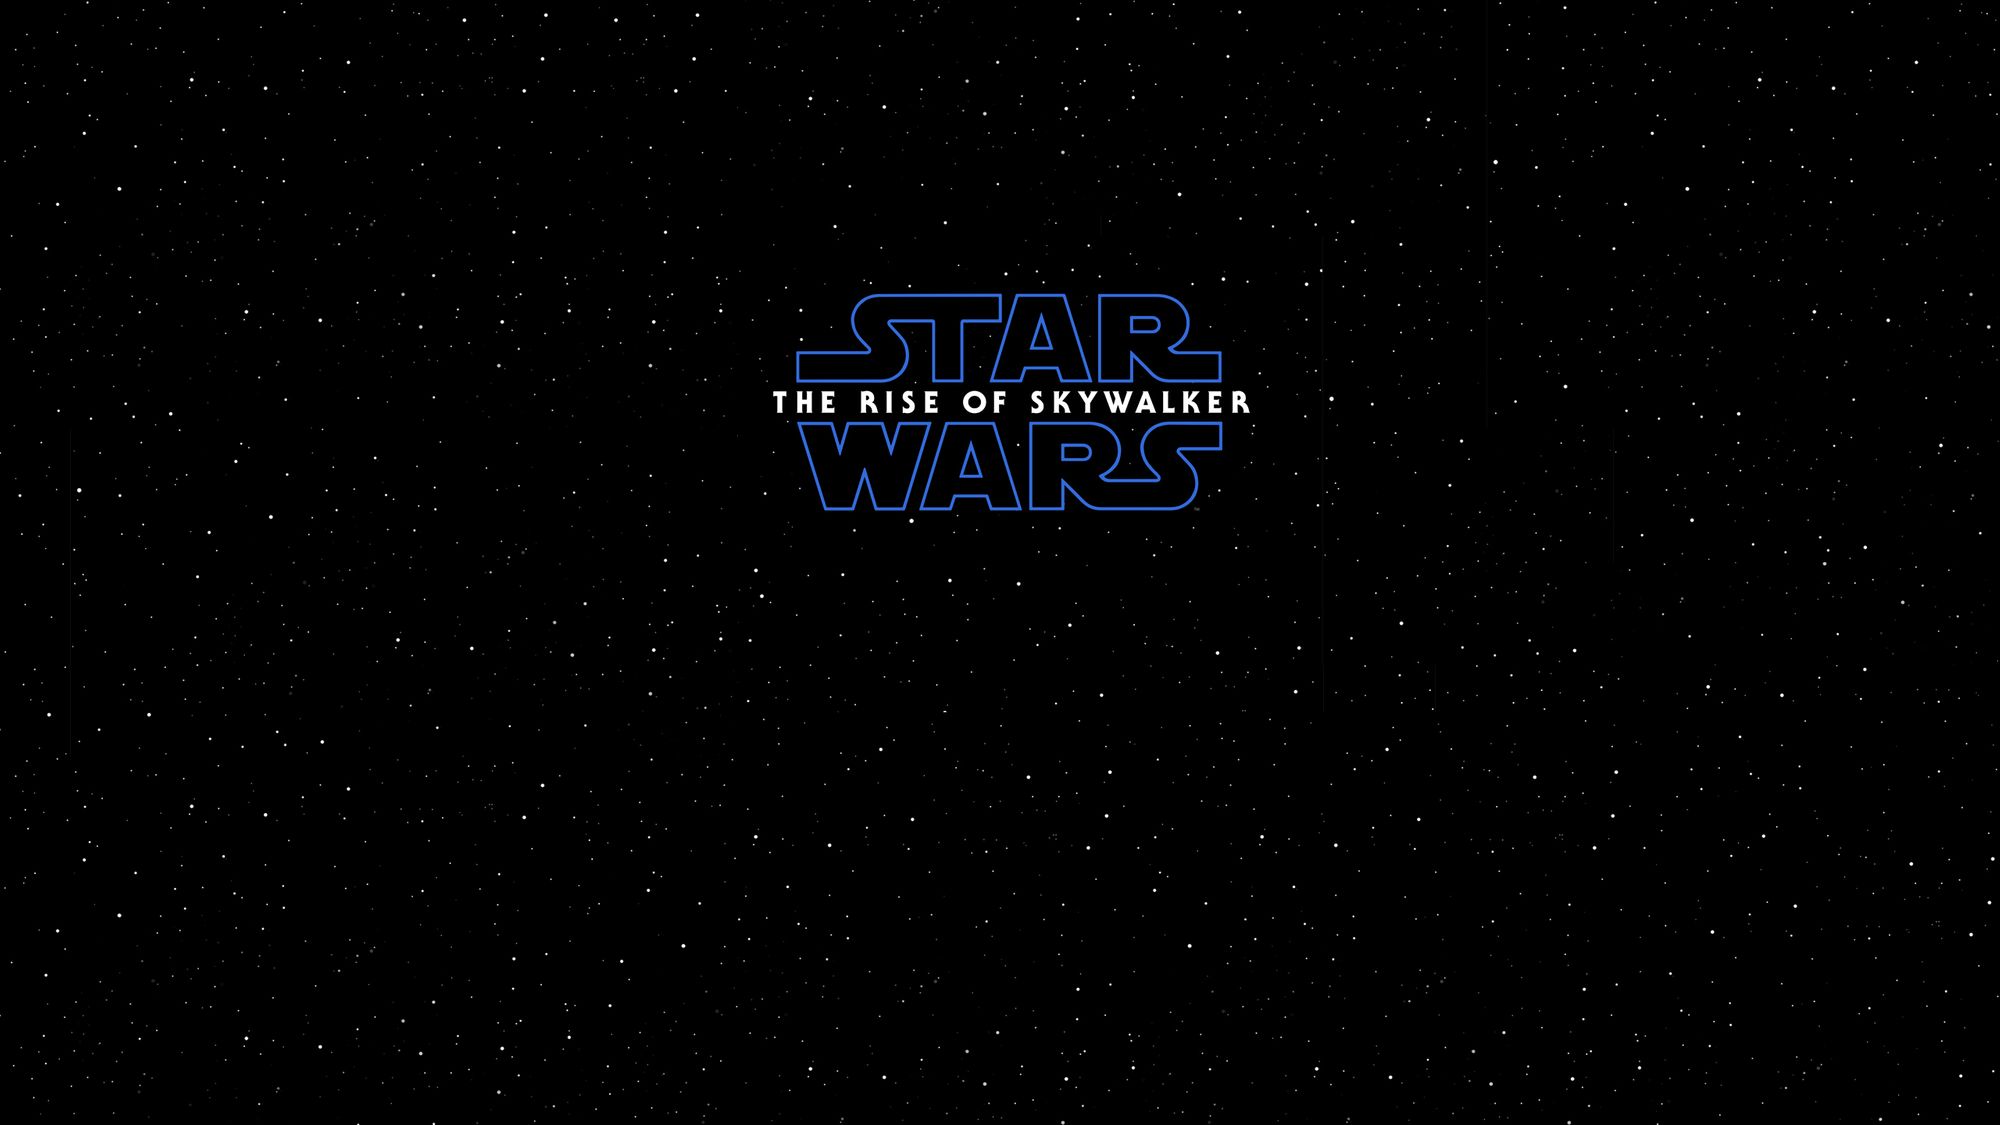 Star Wars: The Rise of Skywalker Sith Trooper reveal